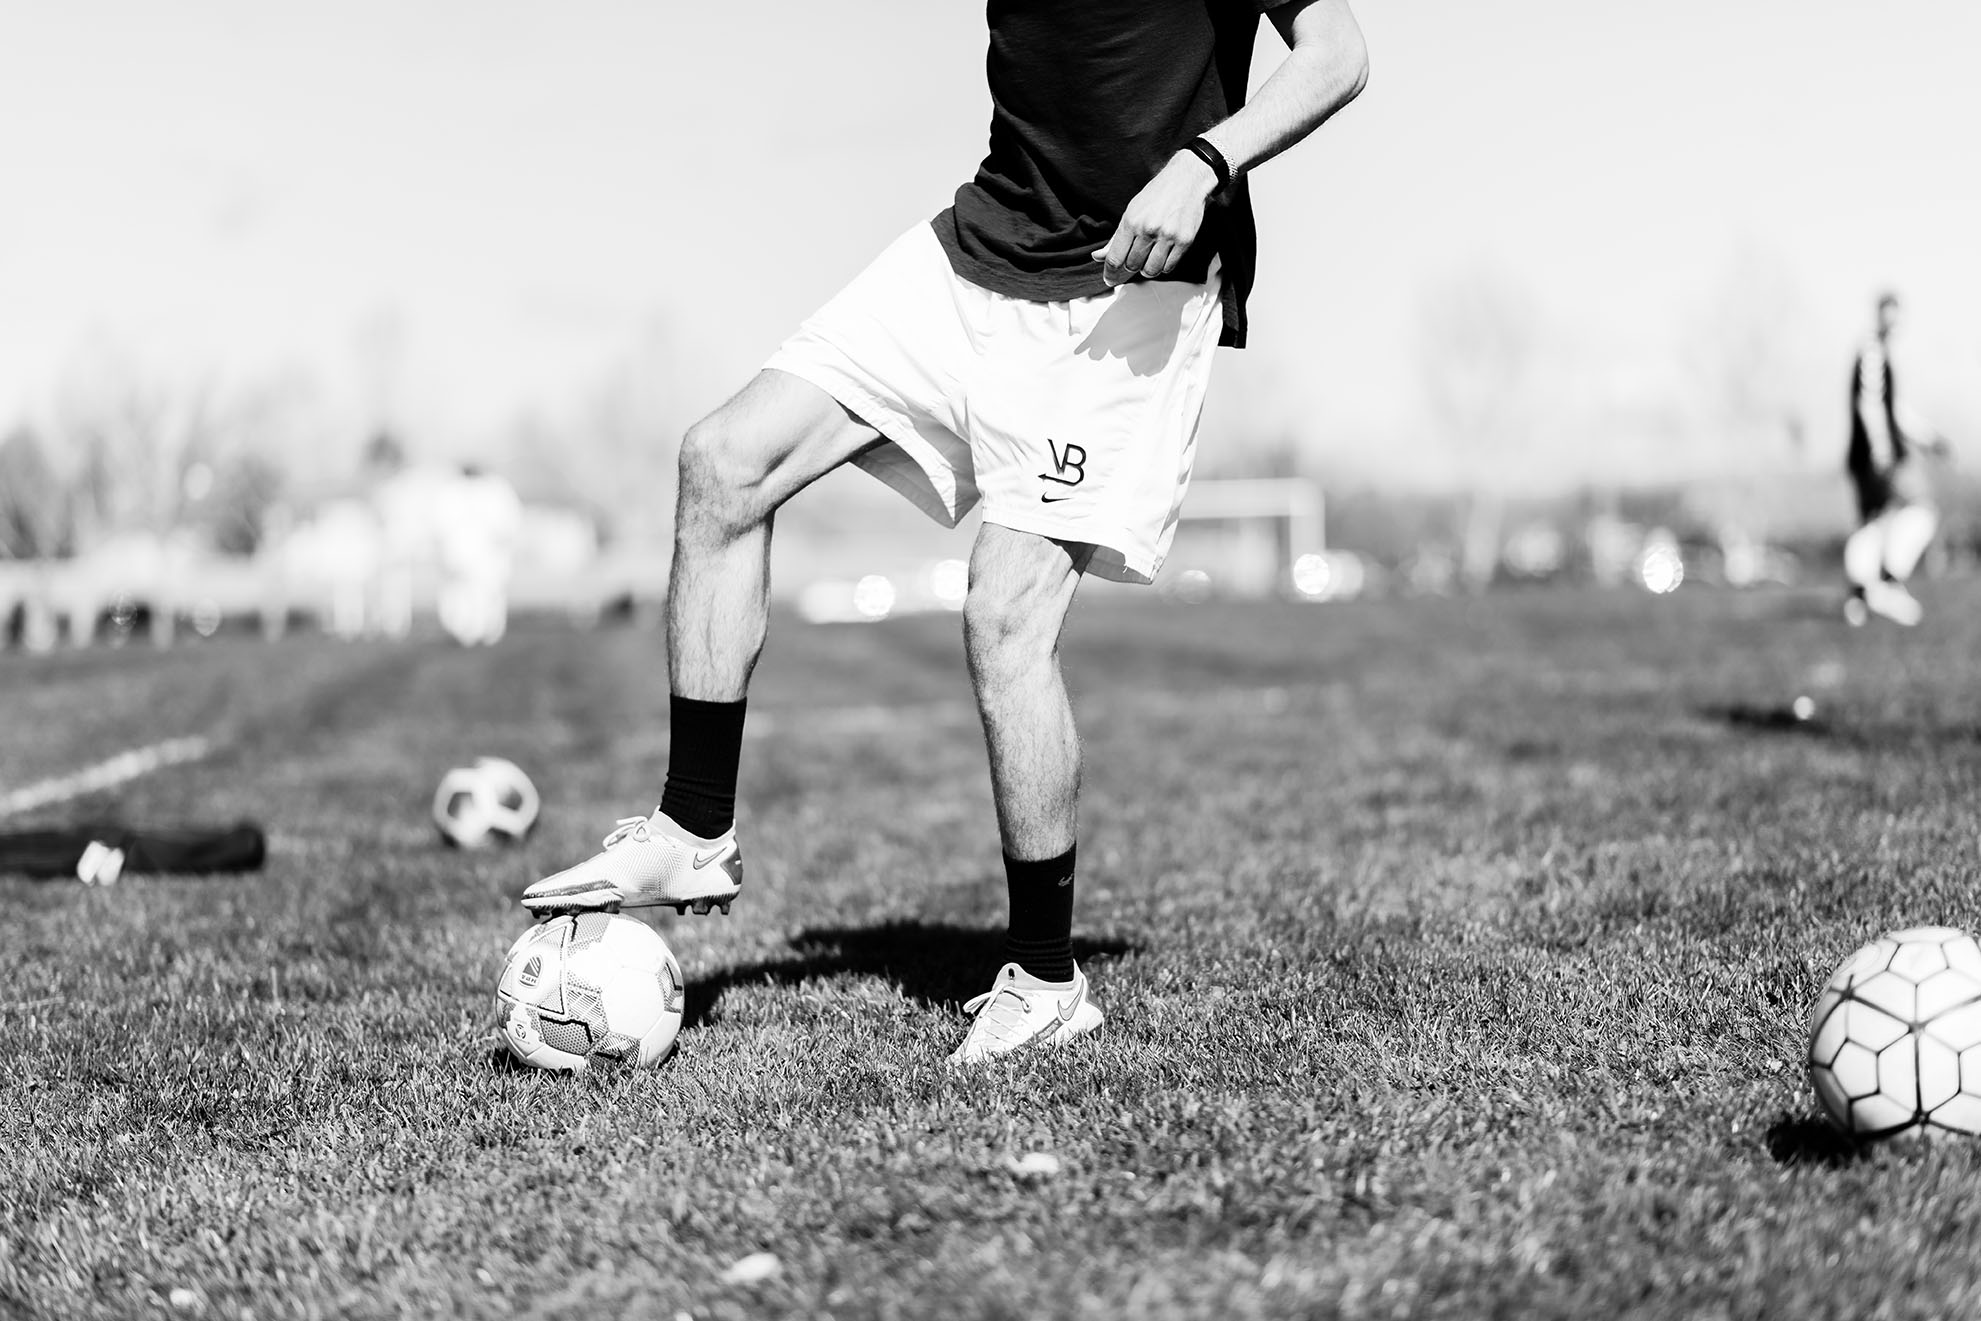 Villyan Bijev plays soccer on the soccer field 